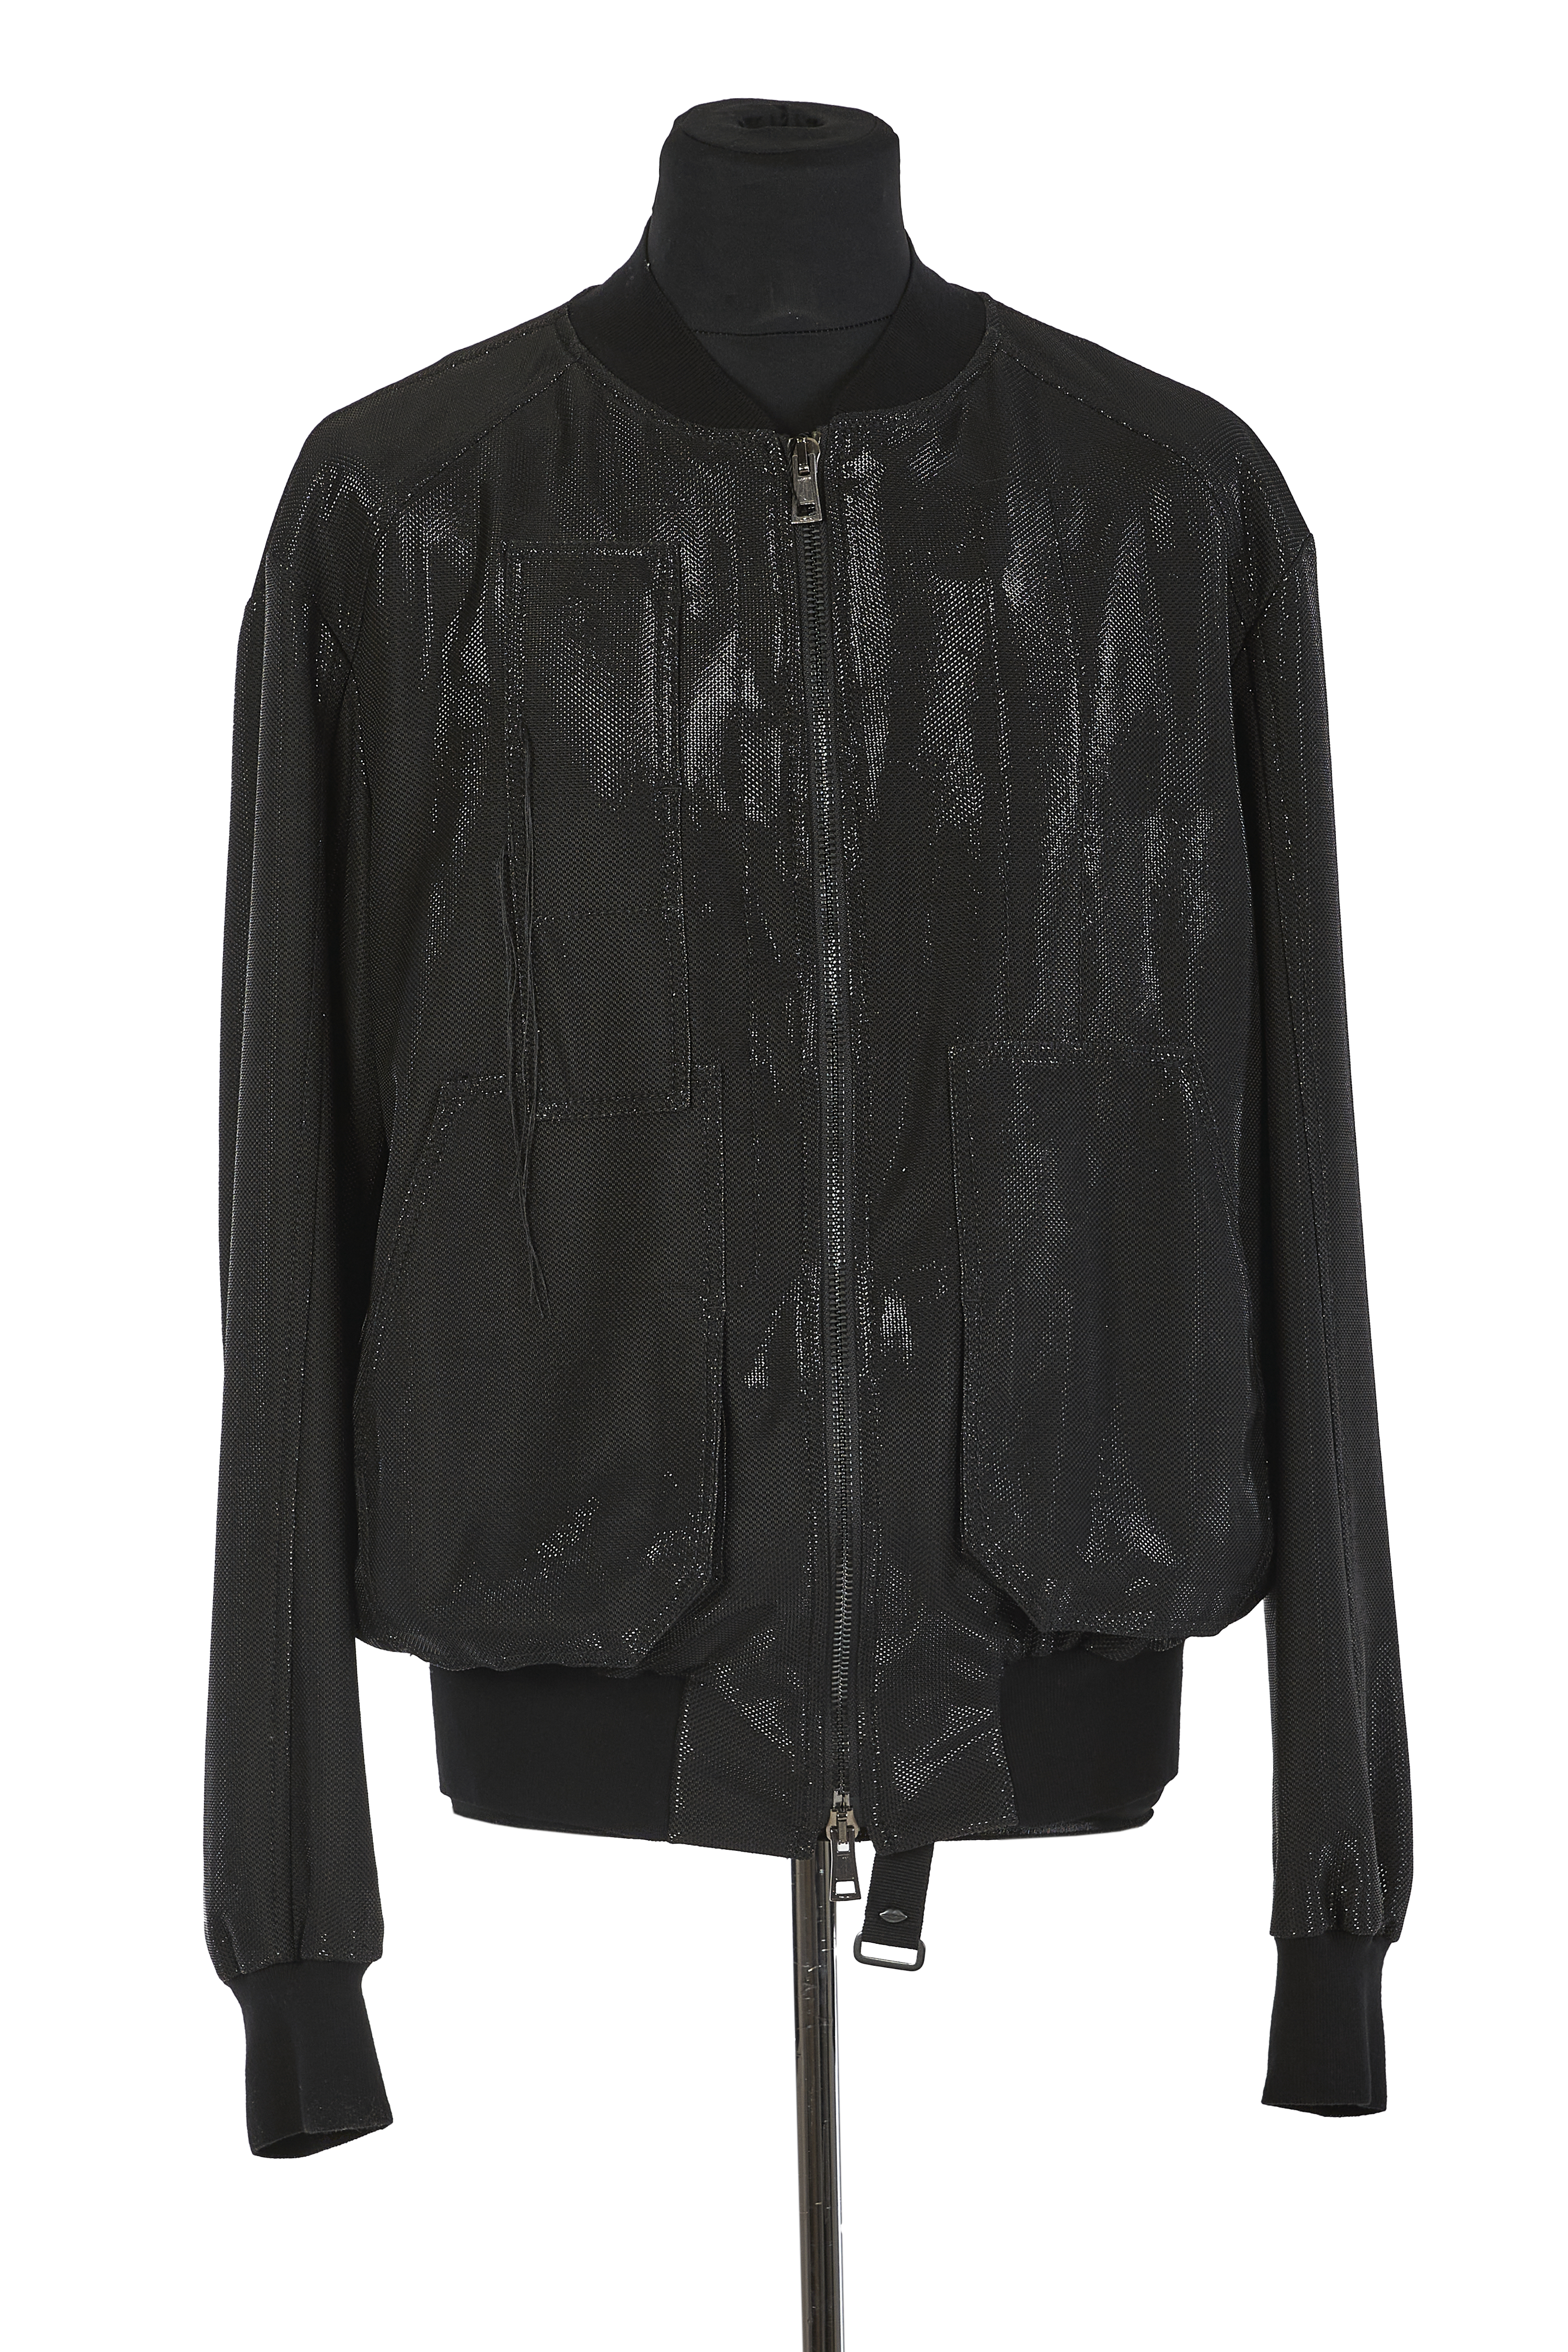 tracksuit jacket  •  black